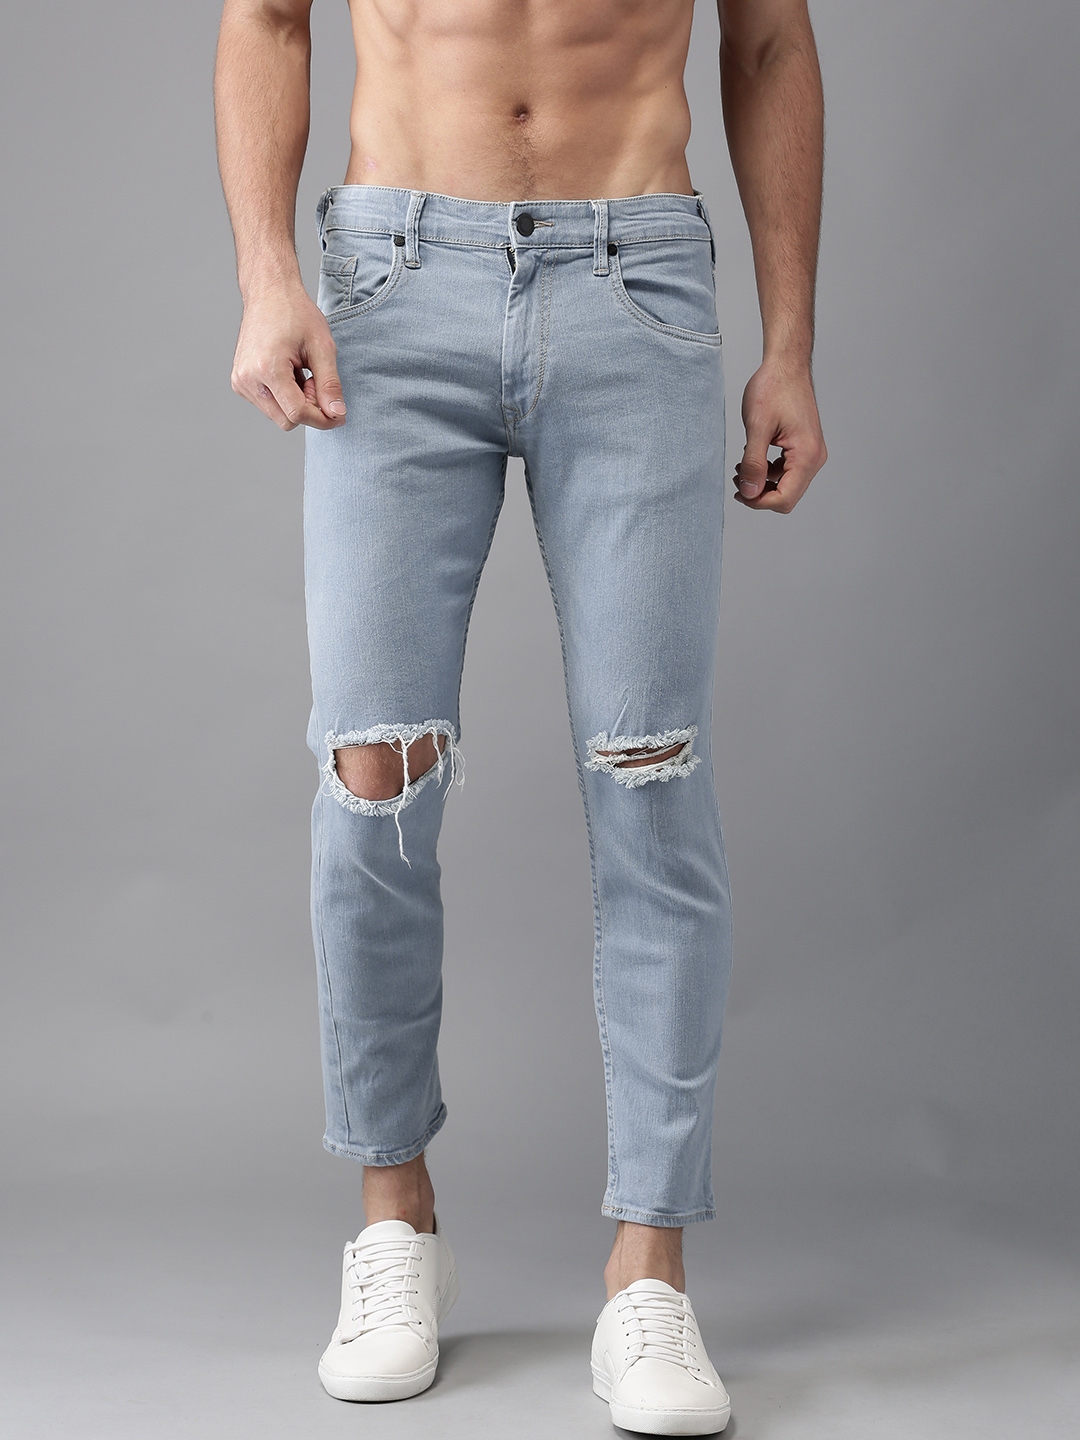 Buy Highlander Grey Relaxed Fit Jeans for Men Online at Rs.819 - Ketch